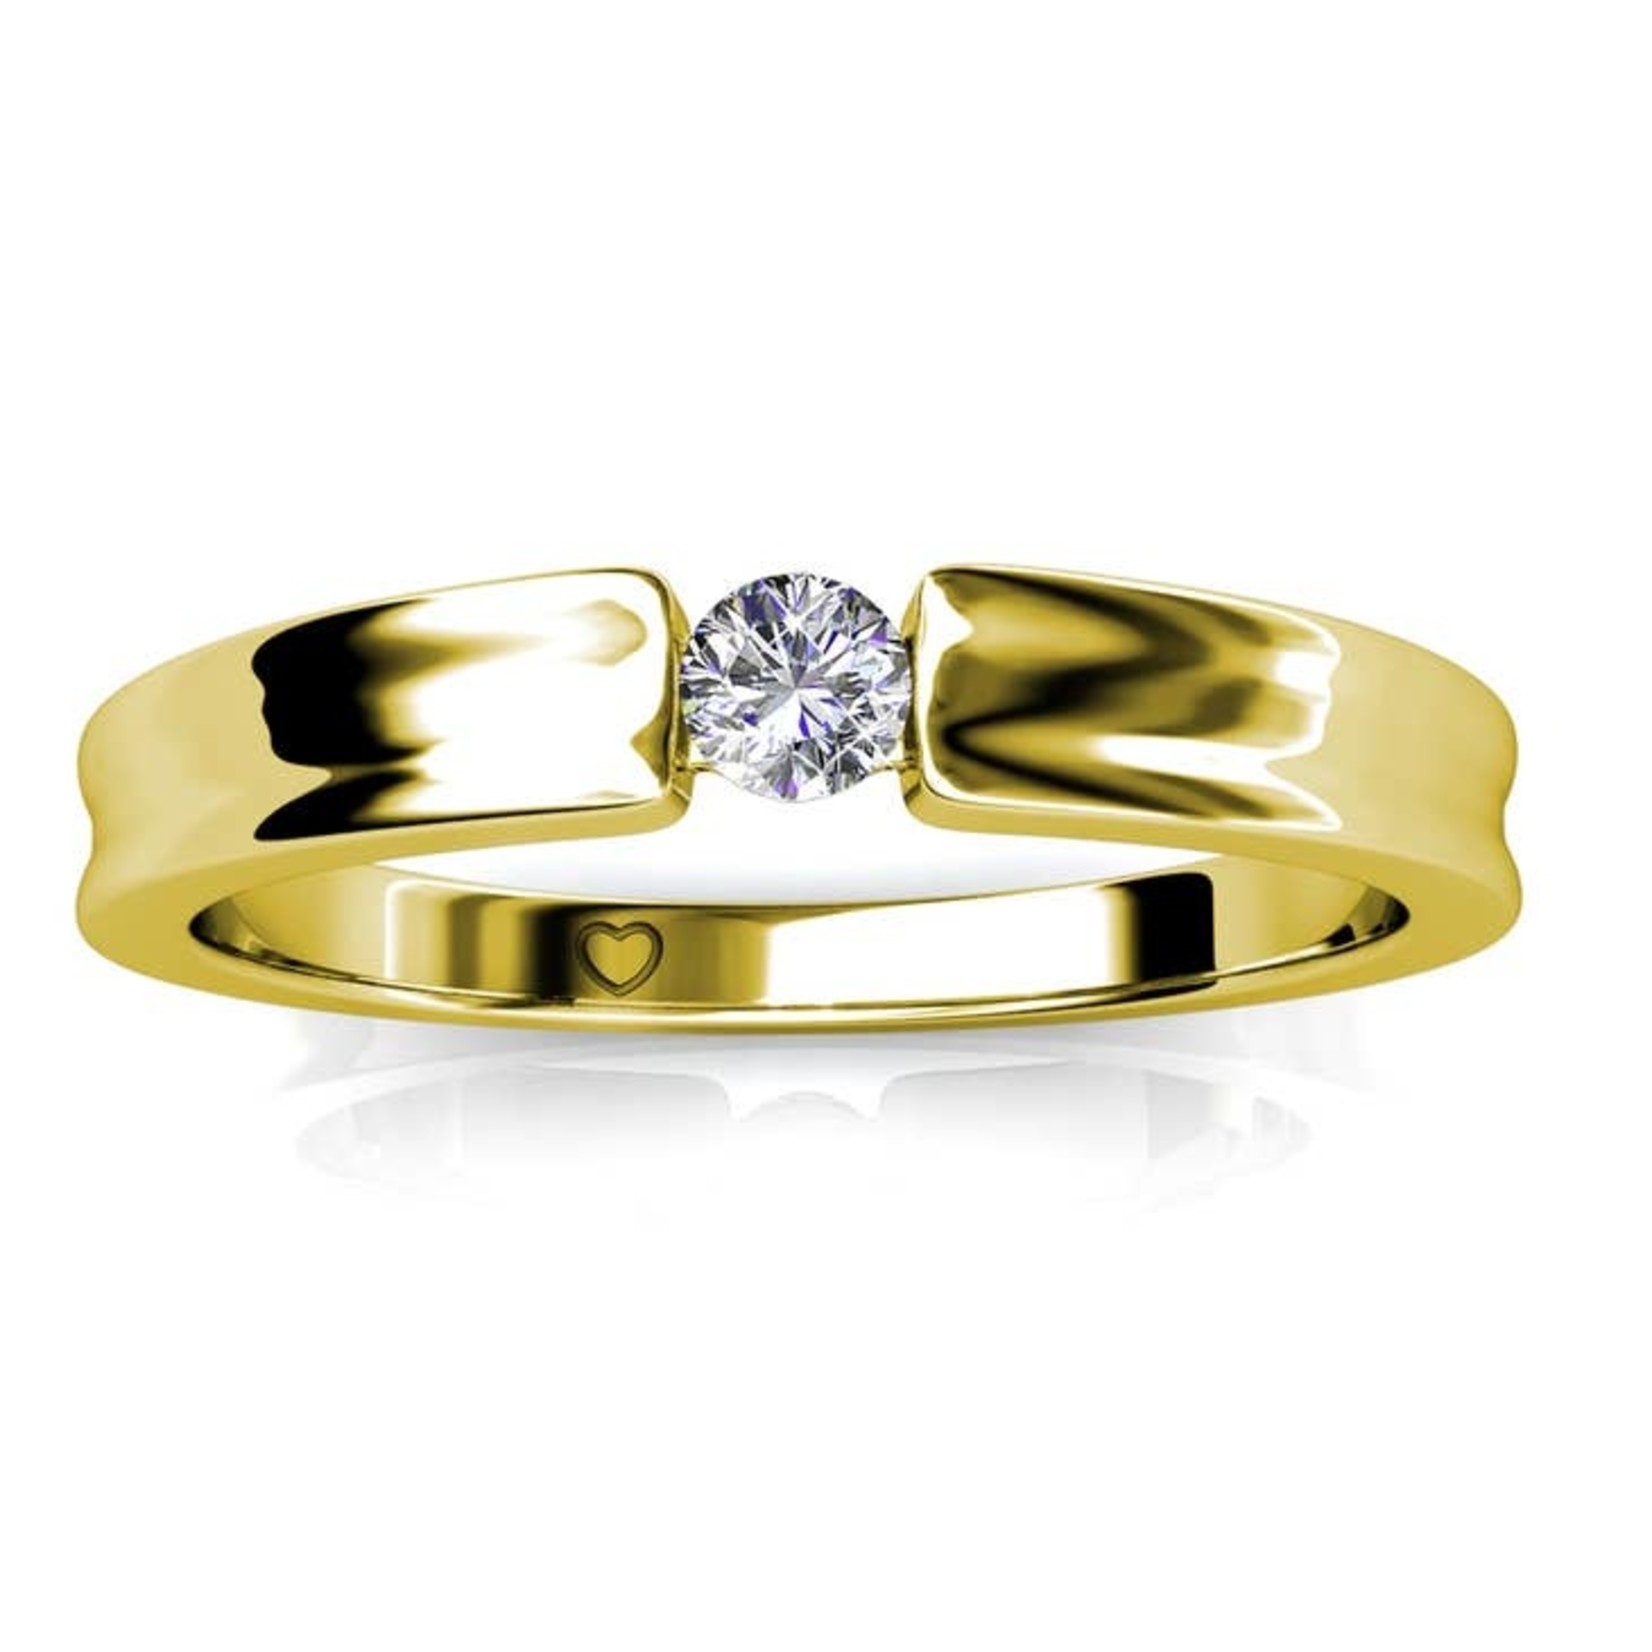 MYC-Paris Simplicity Ring - Goud en kristal - Maat 56